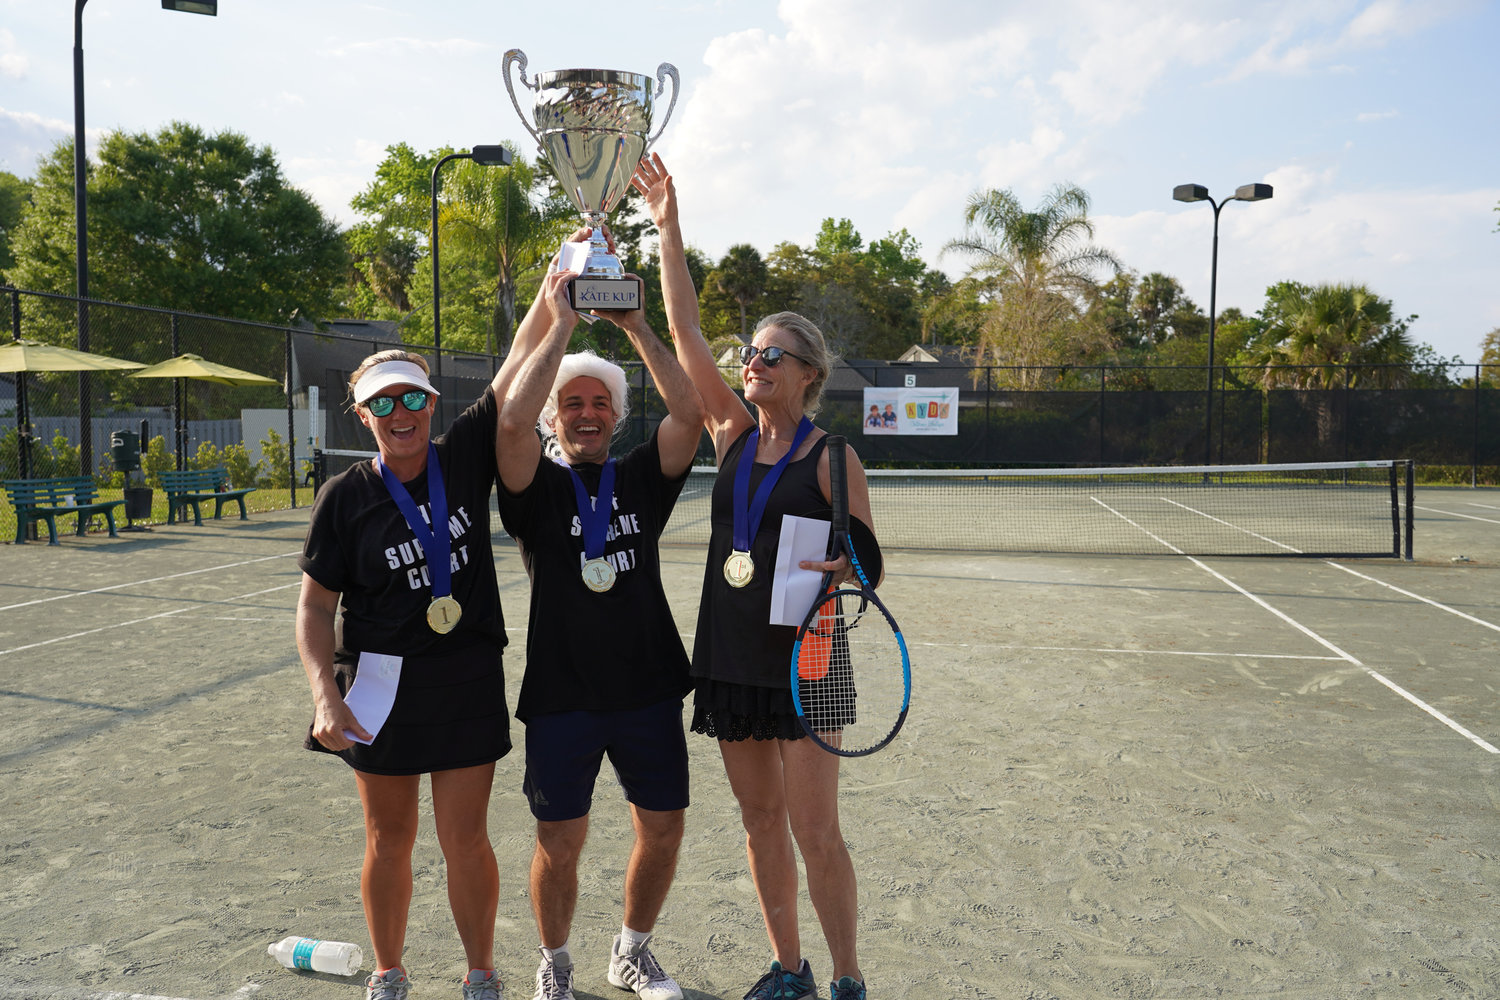 The “Supreme Court” team of Liz Burke, Margaret DeSaussure and Nandino Lango was named the tournament champion.